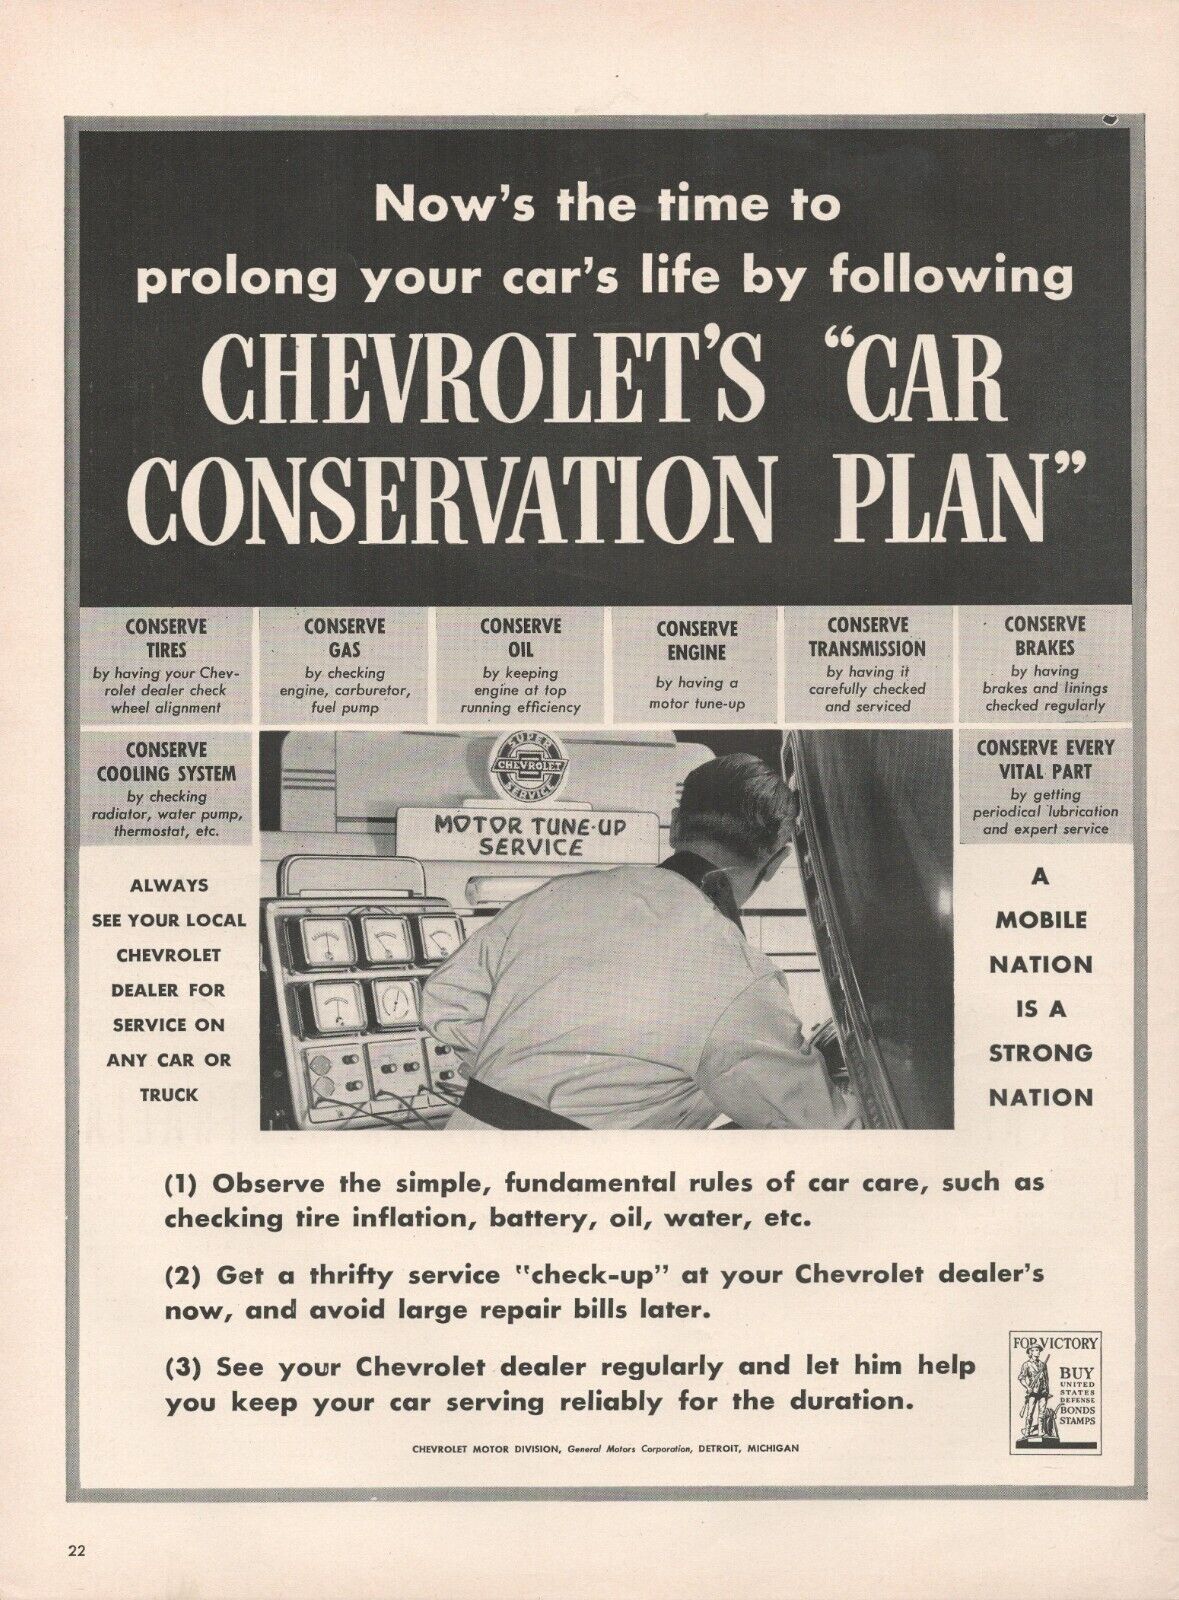 1942 Chevrolet\'s Car Conservation Plan Prolong Life of Car Vintage Print Ad L24